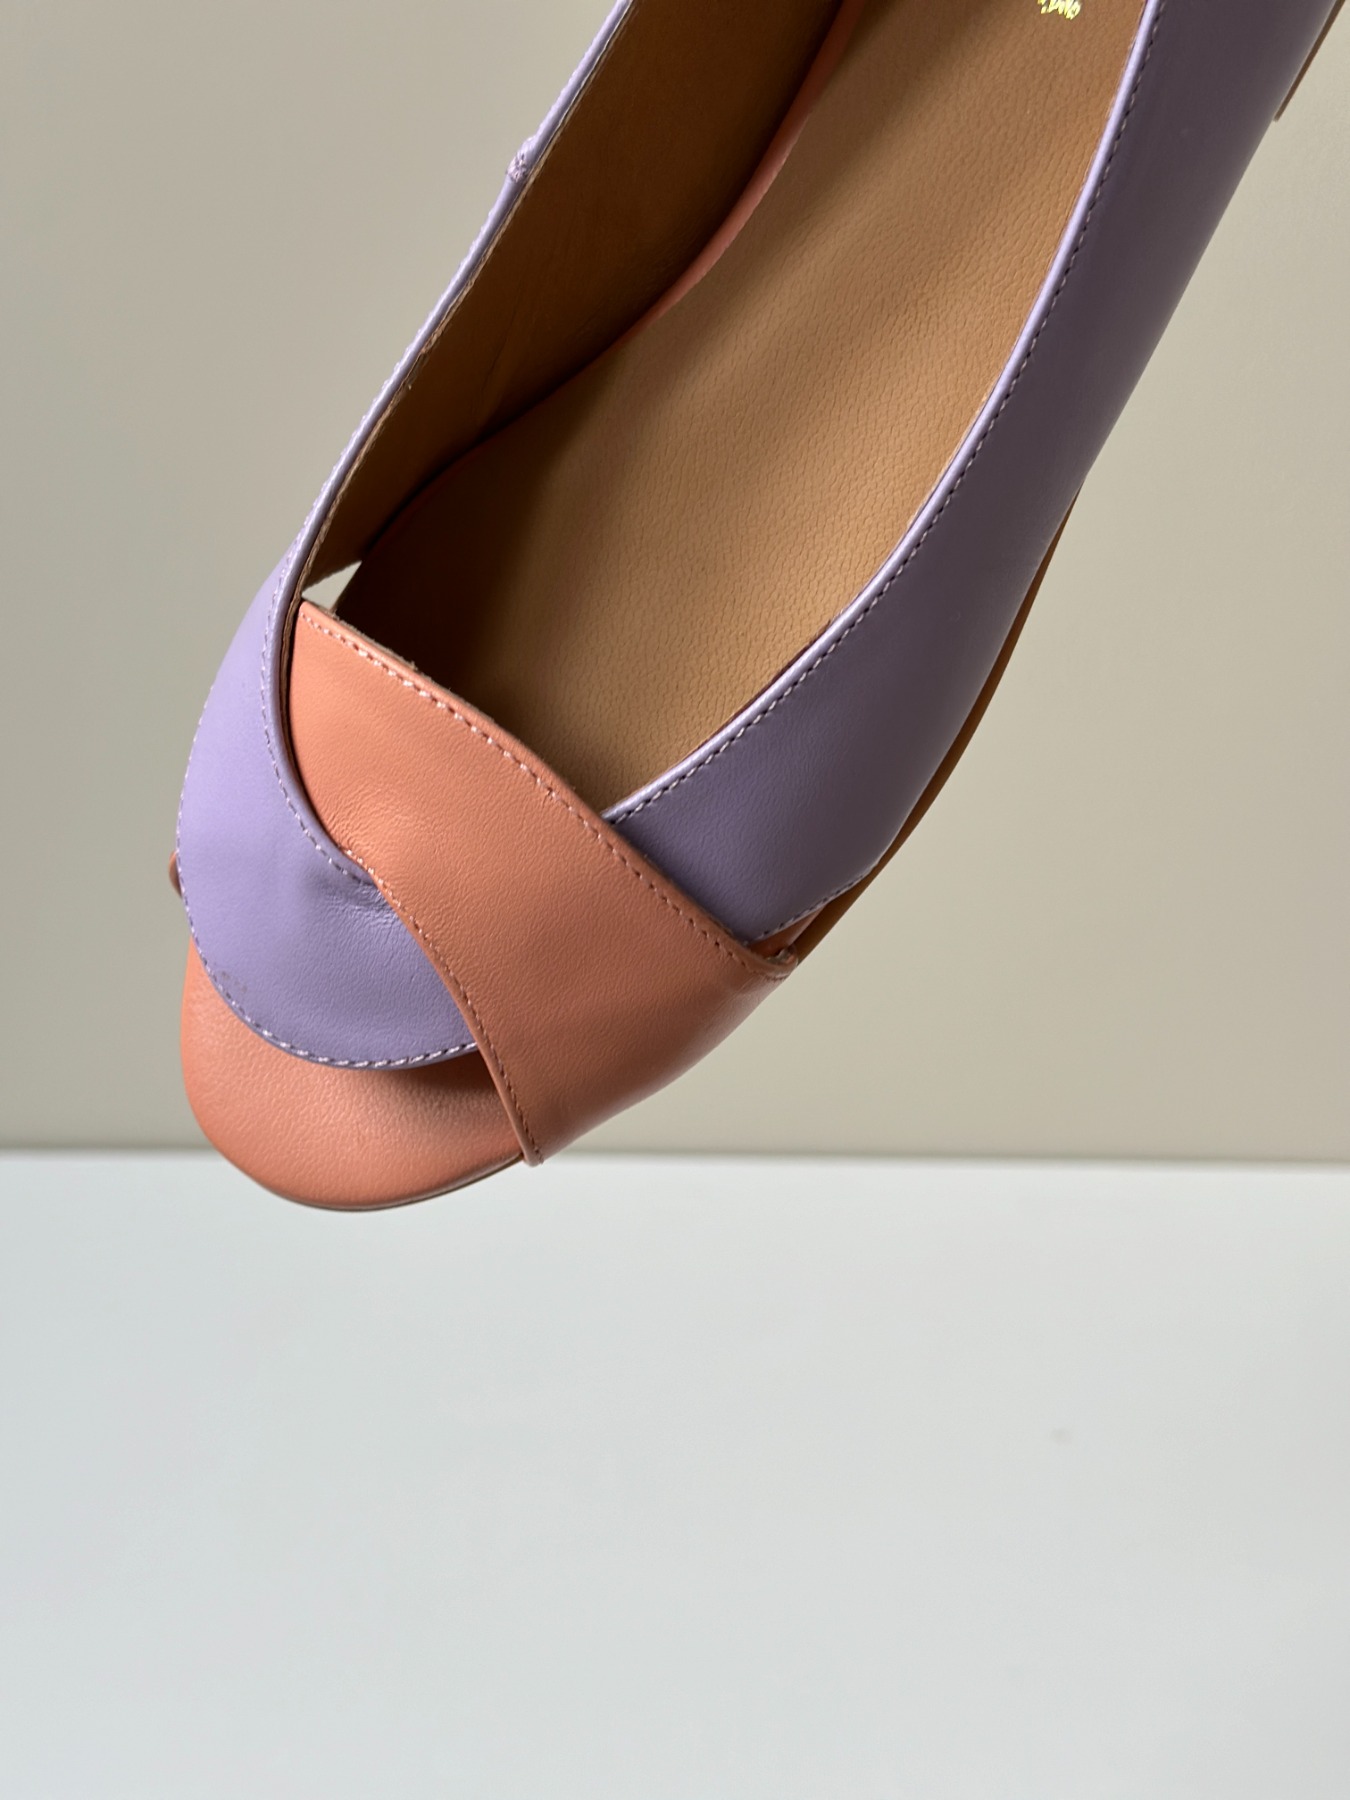 KMB Shoes - Ballerina SOFIE - Apricot/Lila 4